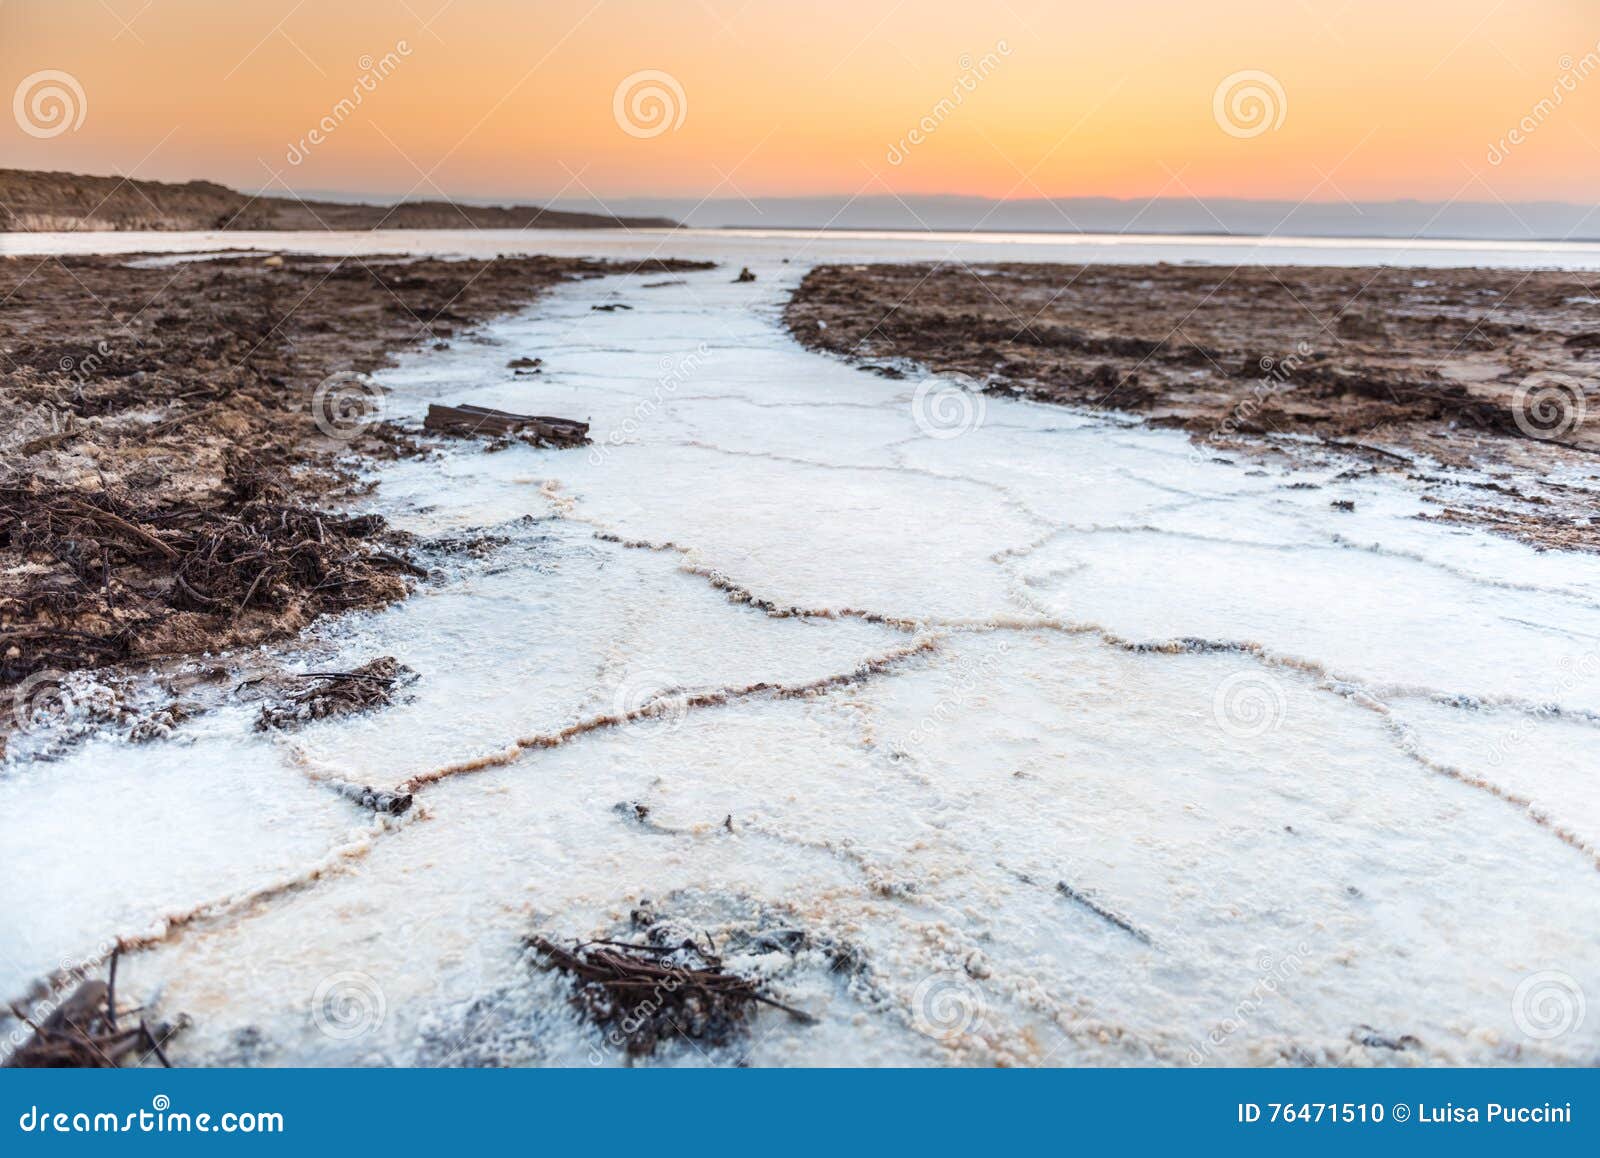 sunset on salt crystals in the dead sea, jordan